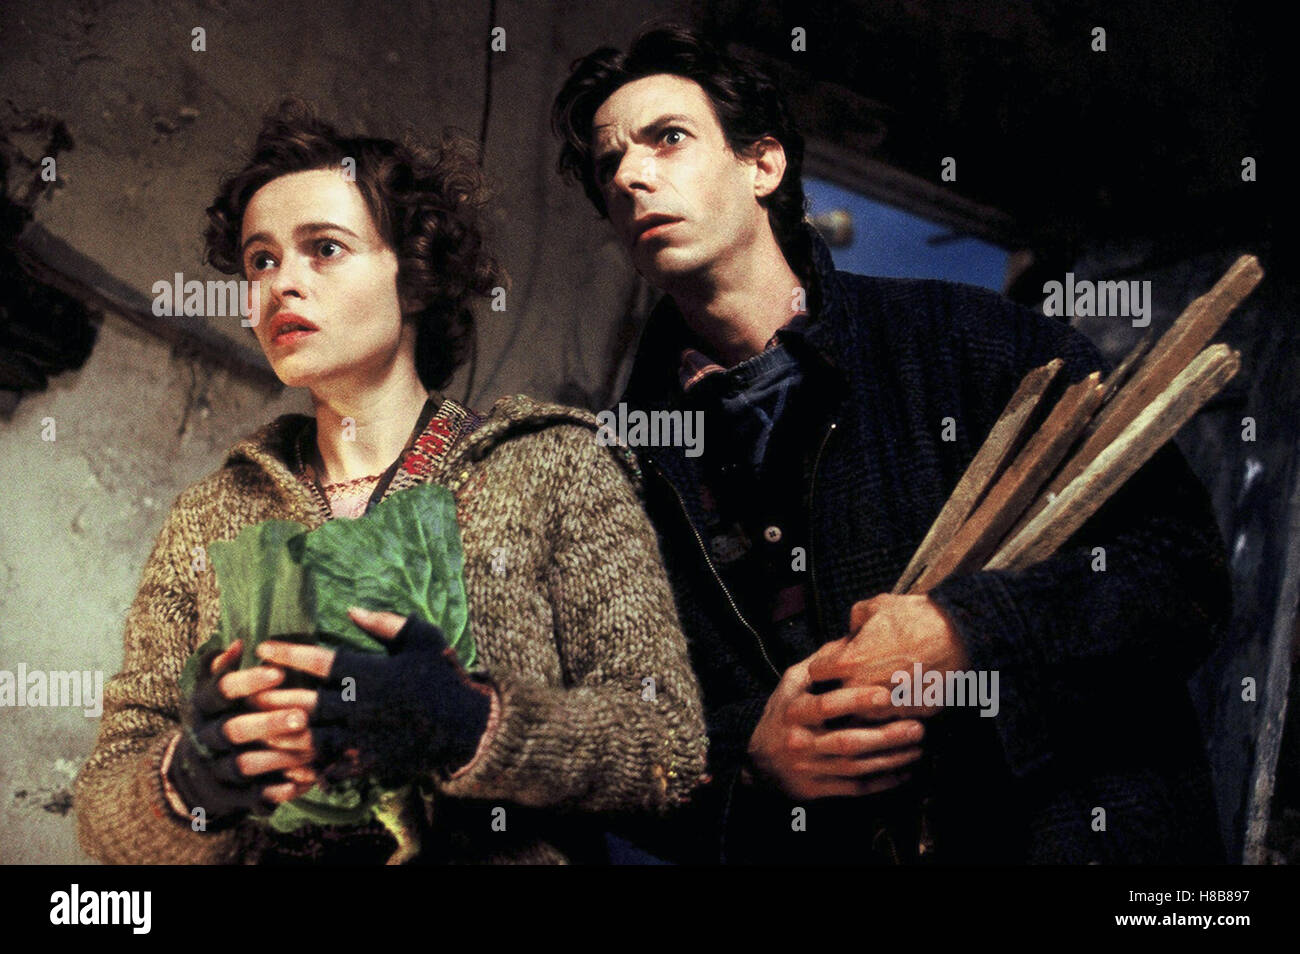 Tim Burton Helena Bonham Carter High Resolution Stock Photography And Images Alamy